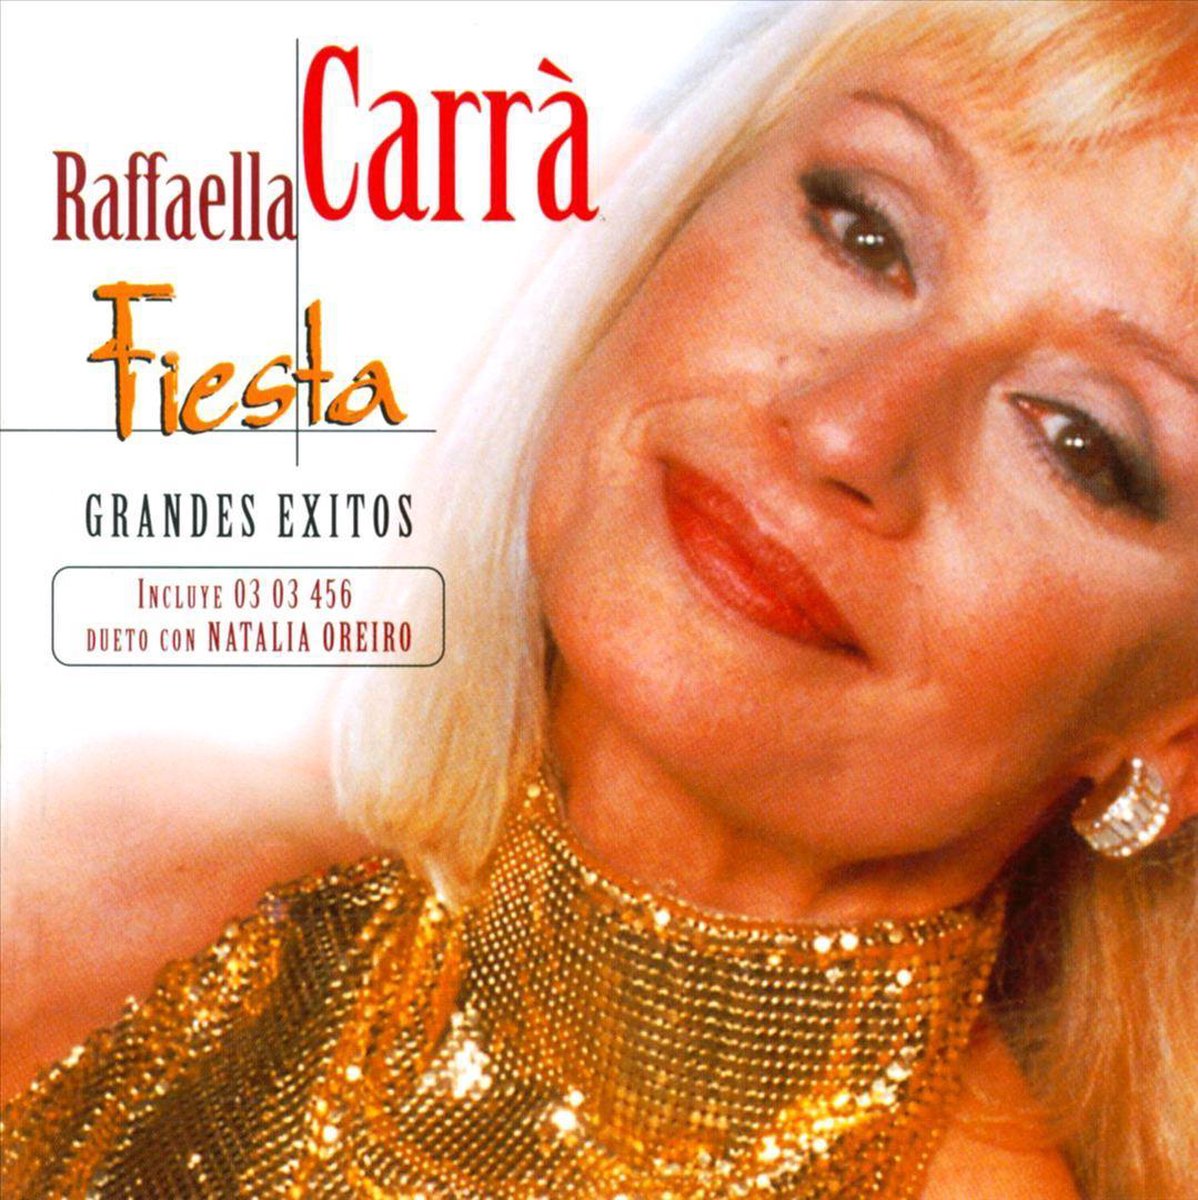 Рафаэлла карра педро. Рафаэлла карра. Рафаэлла карра CD. Raffaella Carra - Raffaella с. Рафаэлла карра альбомы.